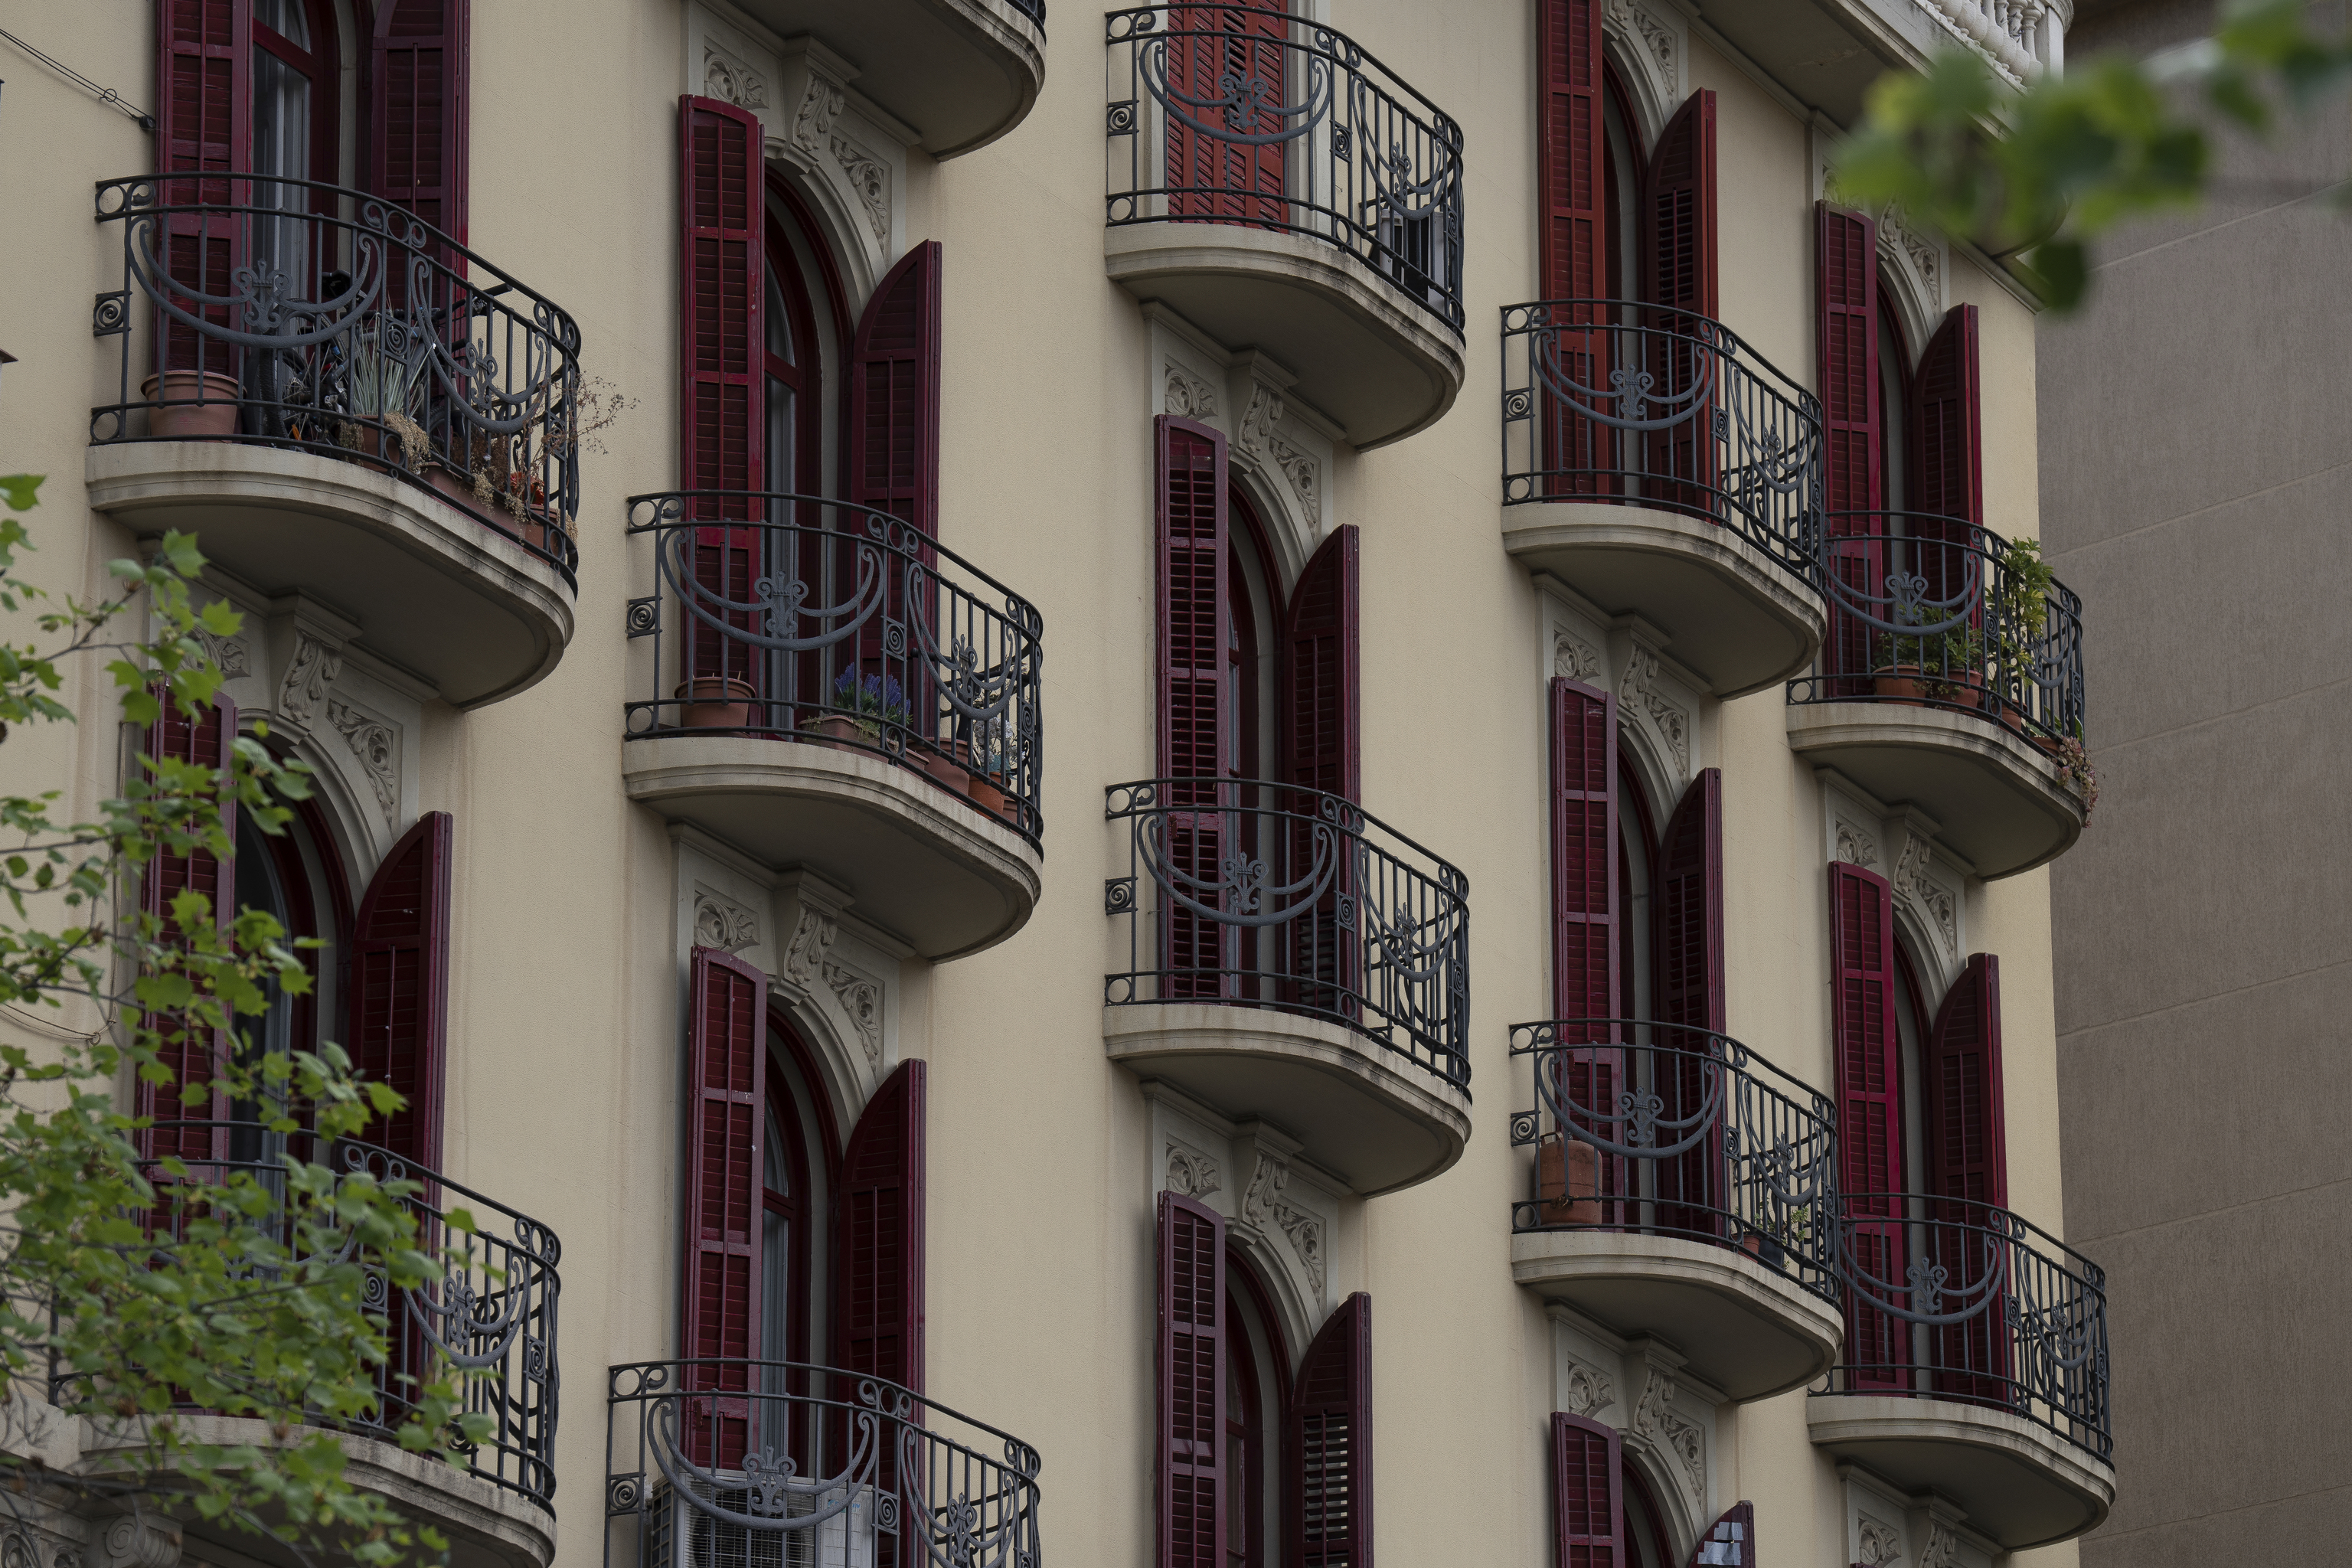 Ventanas de un edificio residencial de Barcelona.